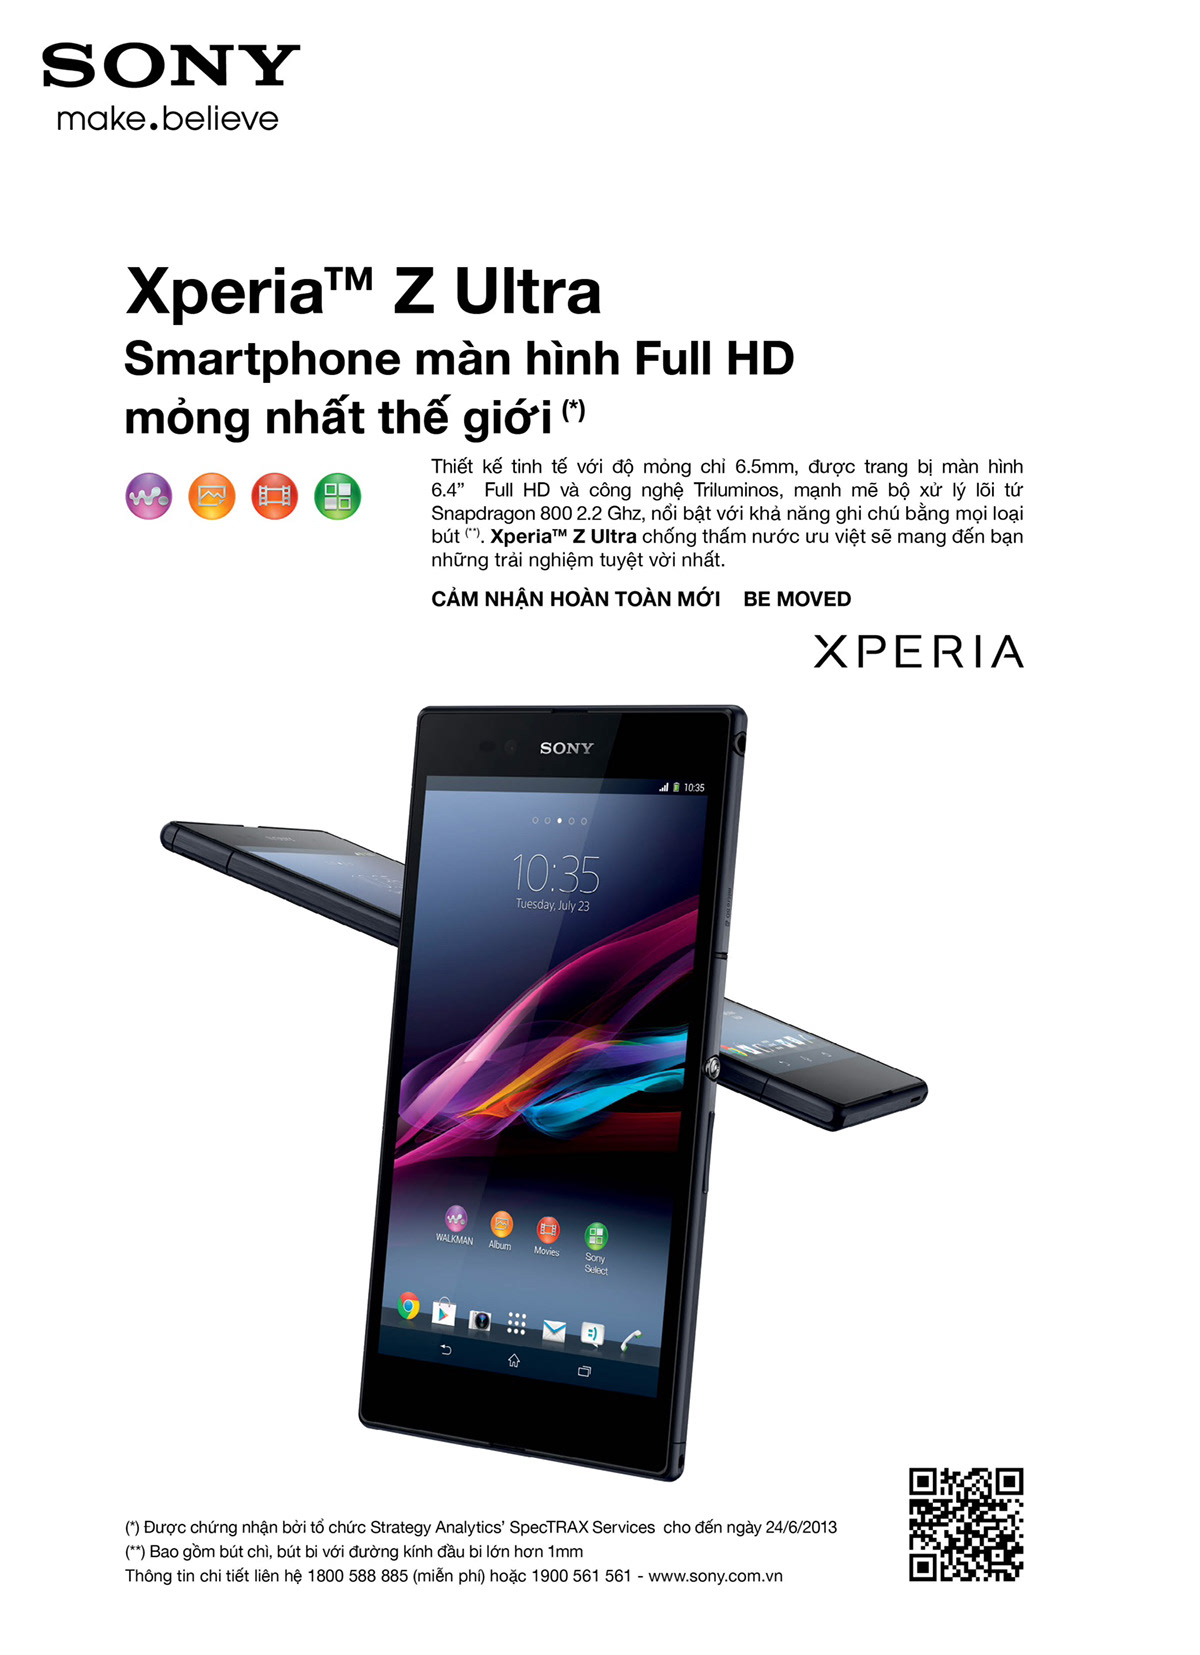 Sony print ads Xperia Z Ultra xperia